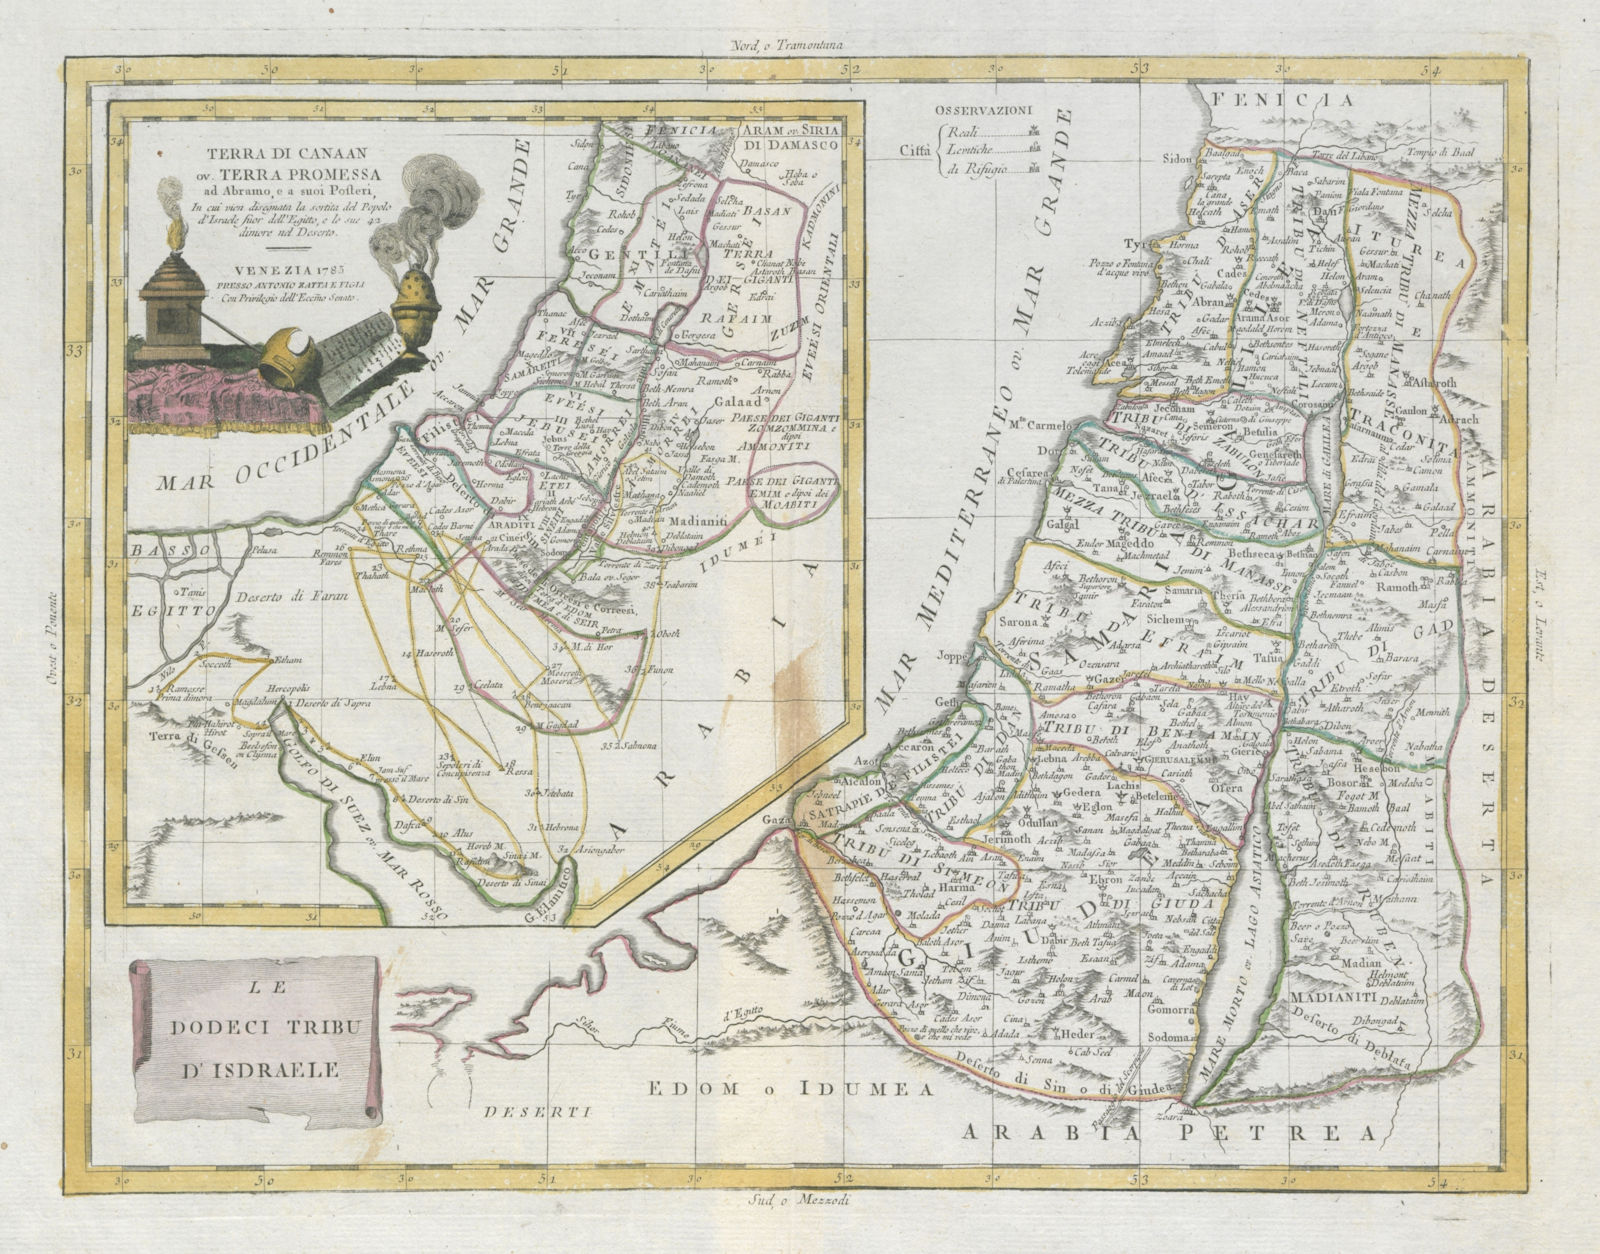 "Le Dodeci Tribu d'Isdraele". Promised Land. 12 Tribes of Israel. ZATTA 1785 map